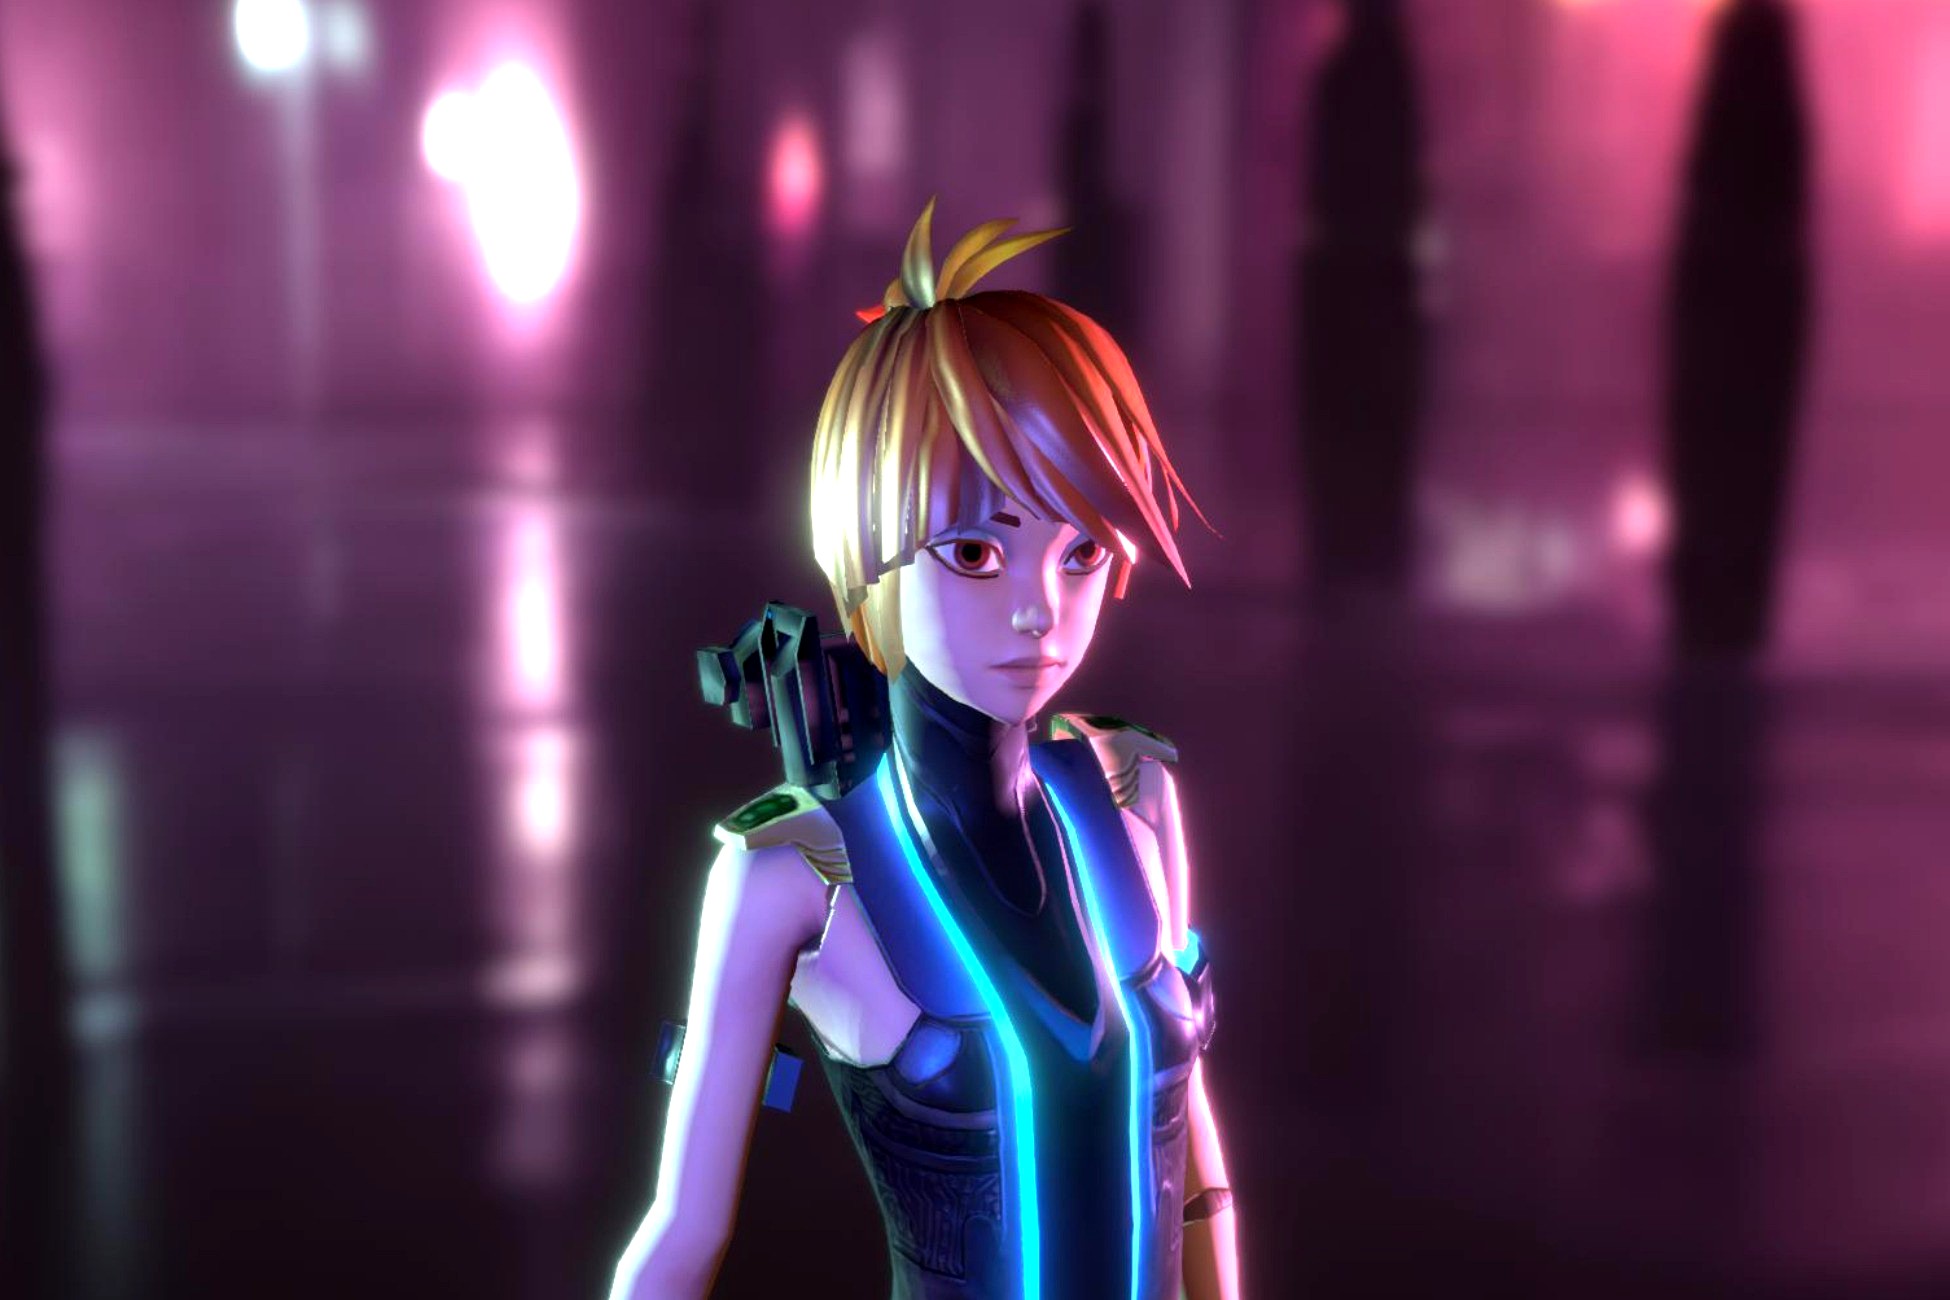 Sci-fi Steampunk Character 01 - Female